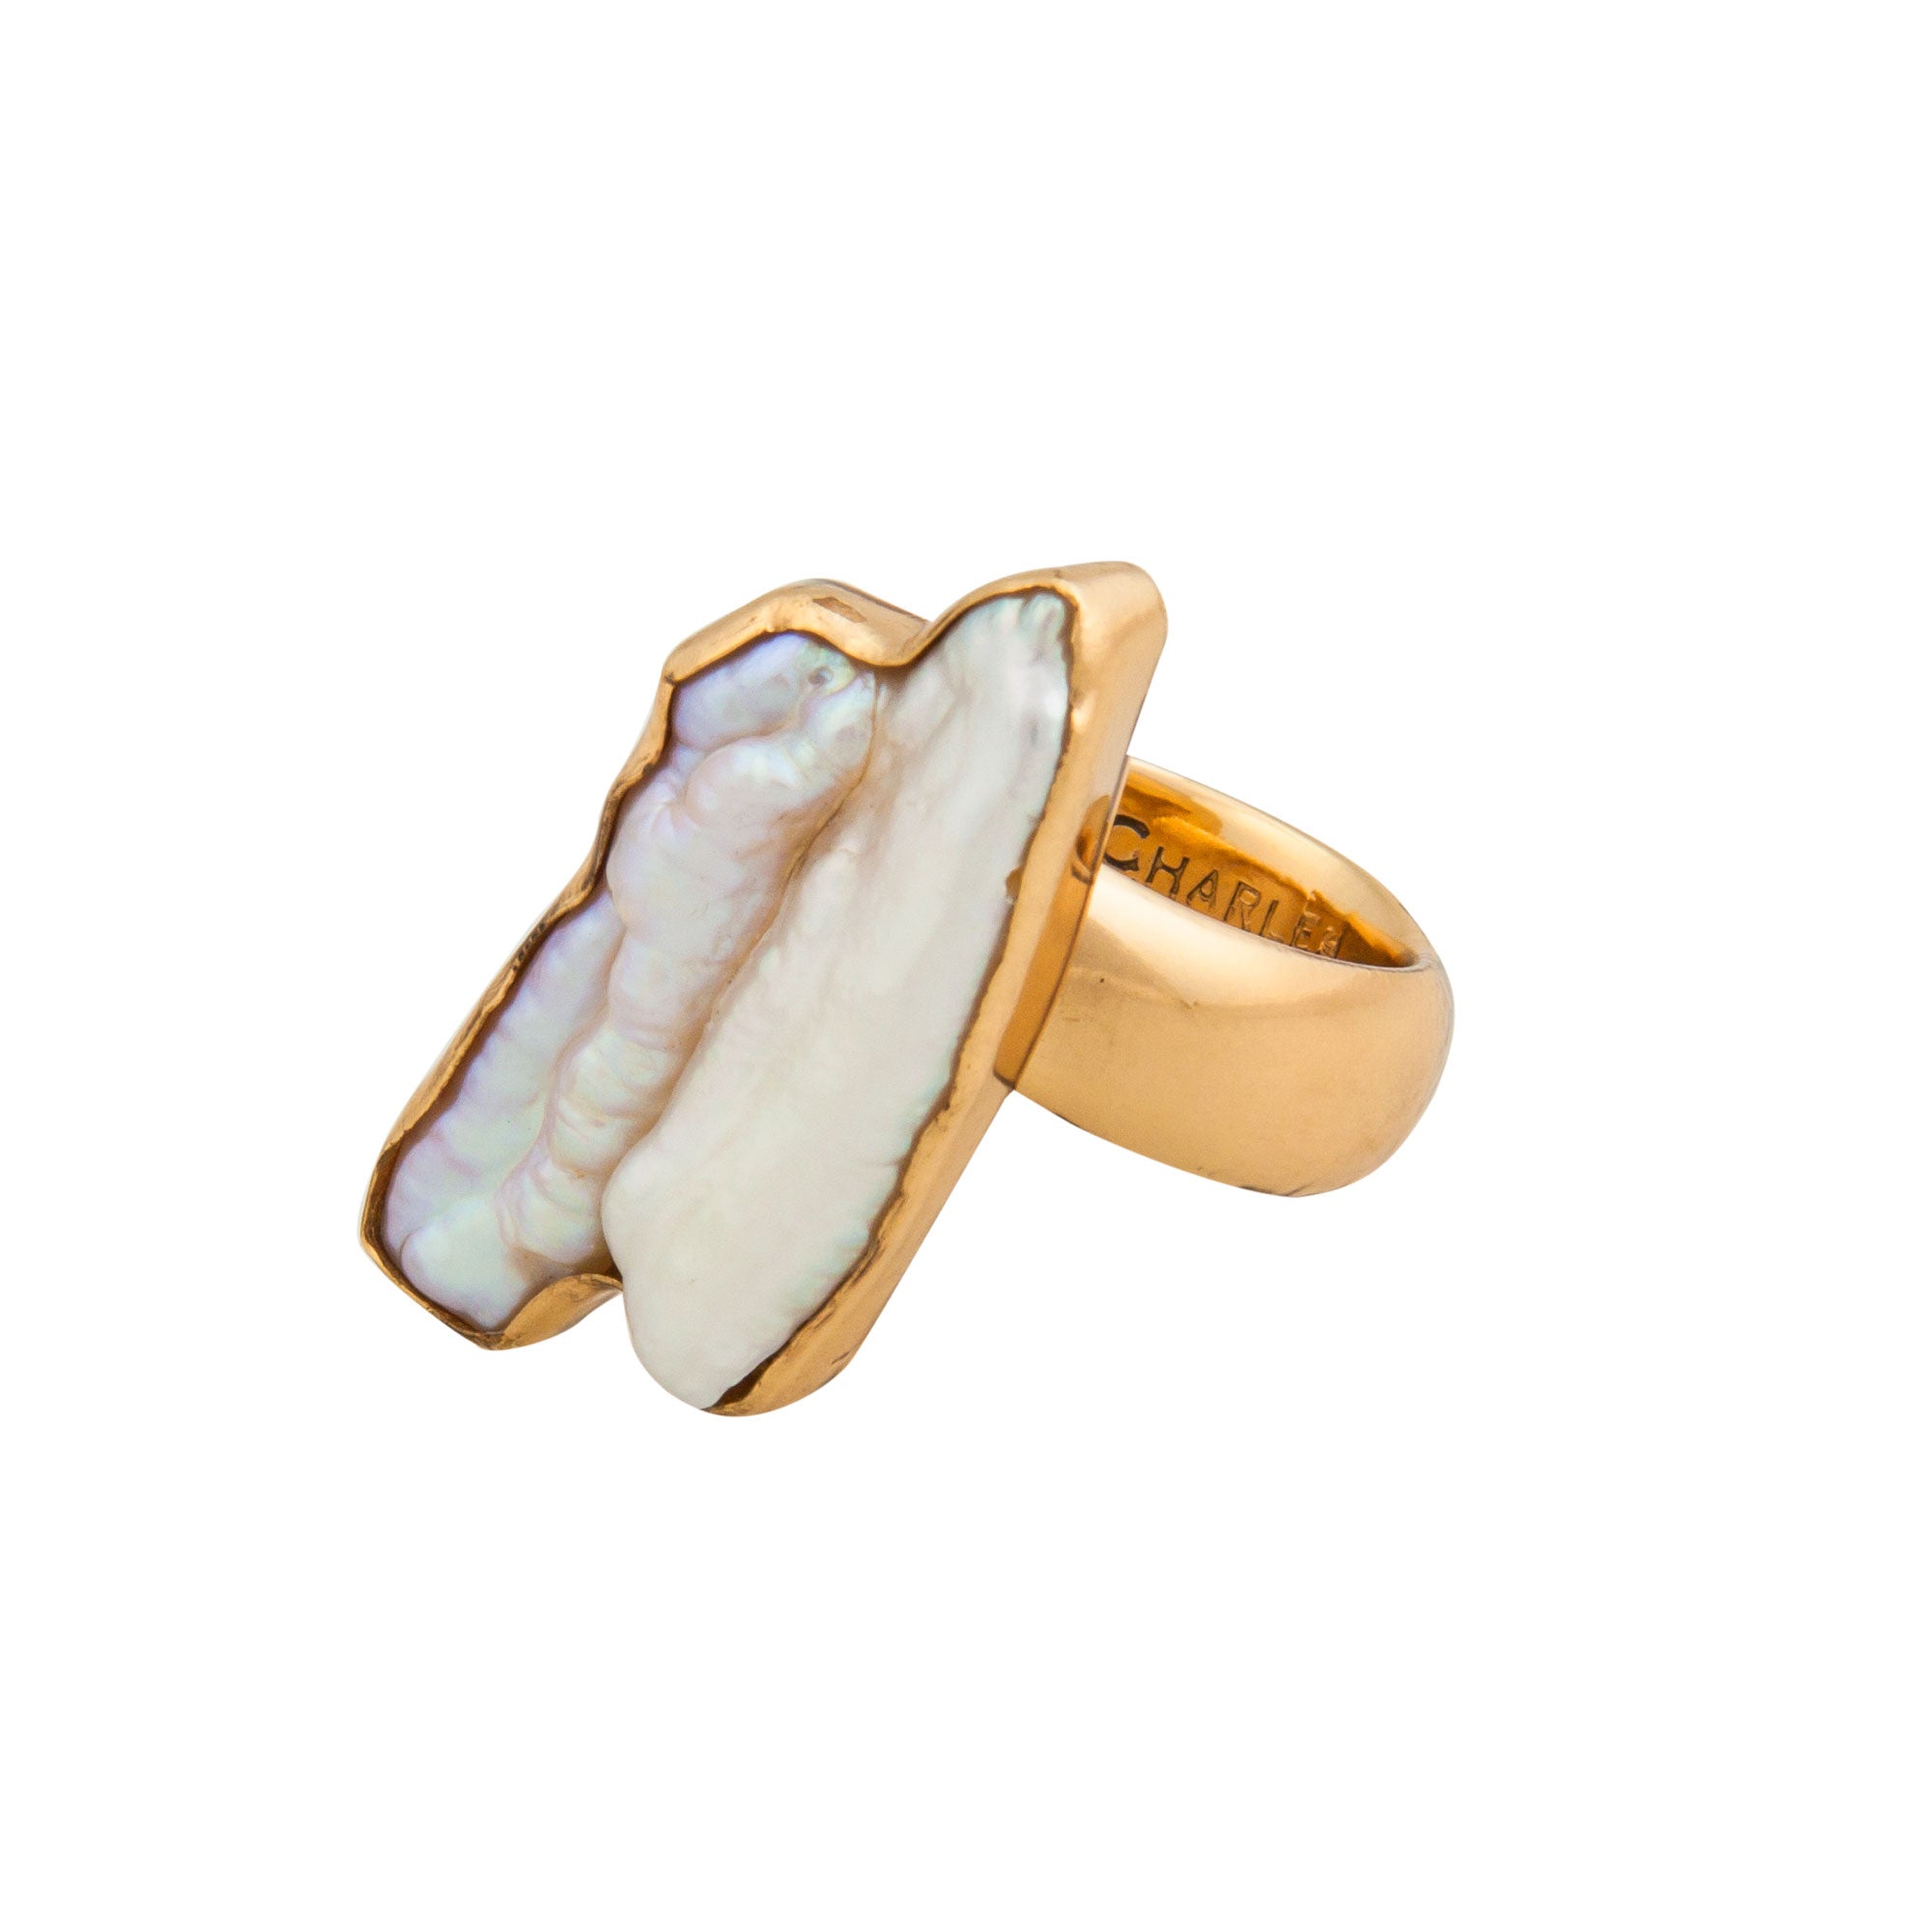 Charles Albert Jewelry - Alchemia Biwa Pearl Adjustable Ring - Side View